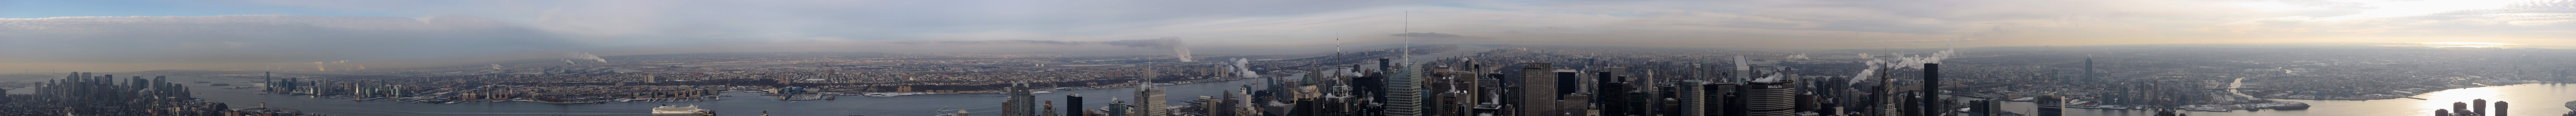 Empire State Building - Panorama